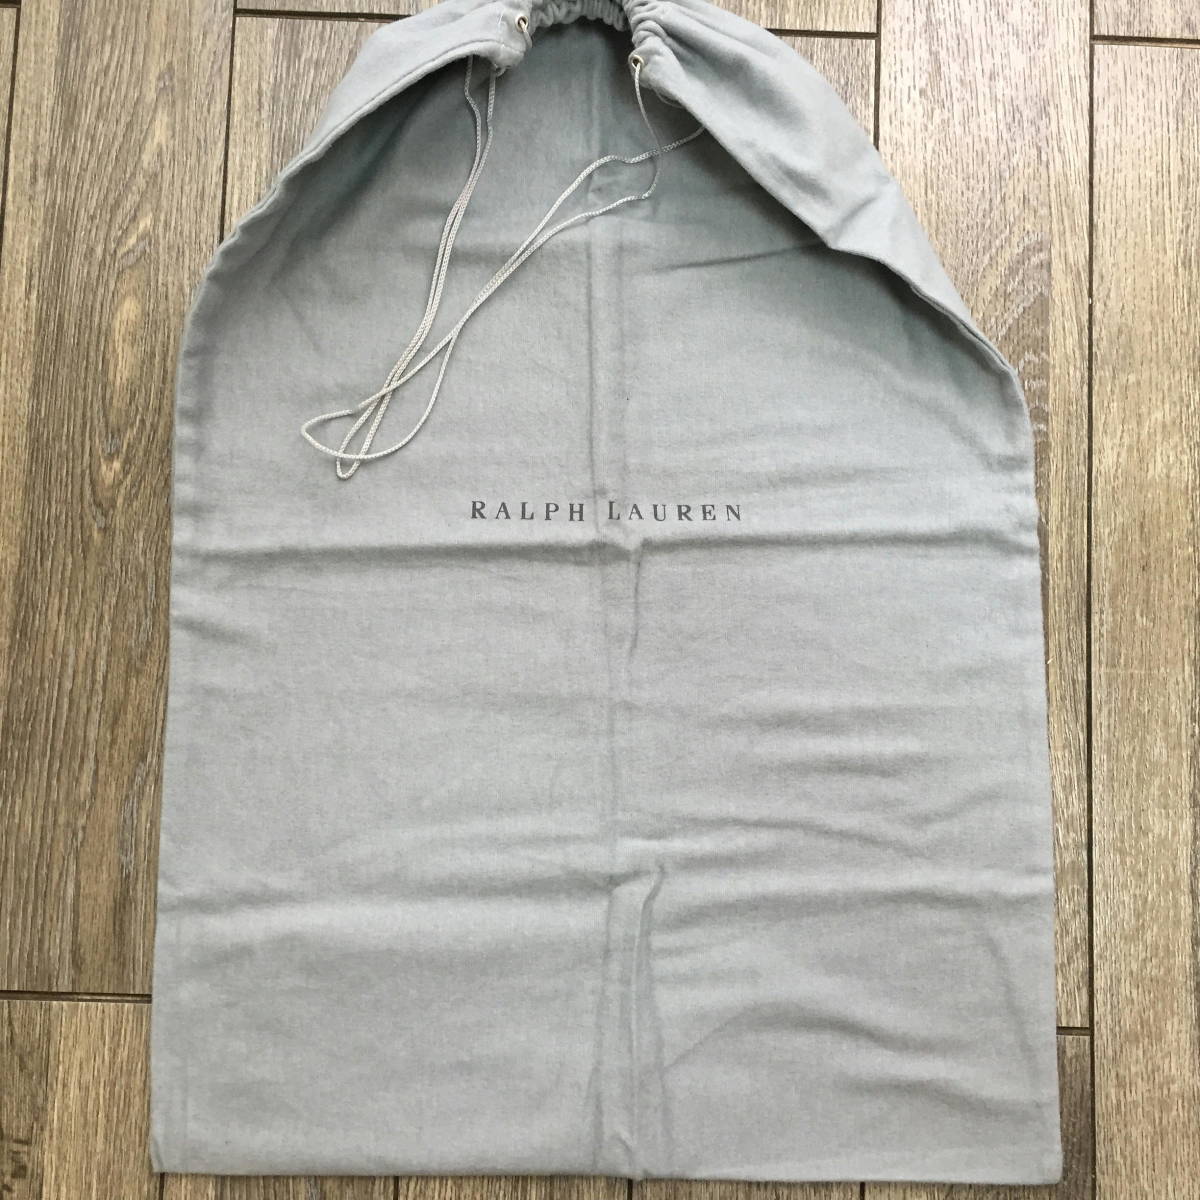 # Ralph Lauren storage bag 58×39cm bag large size RALPH LAUREN